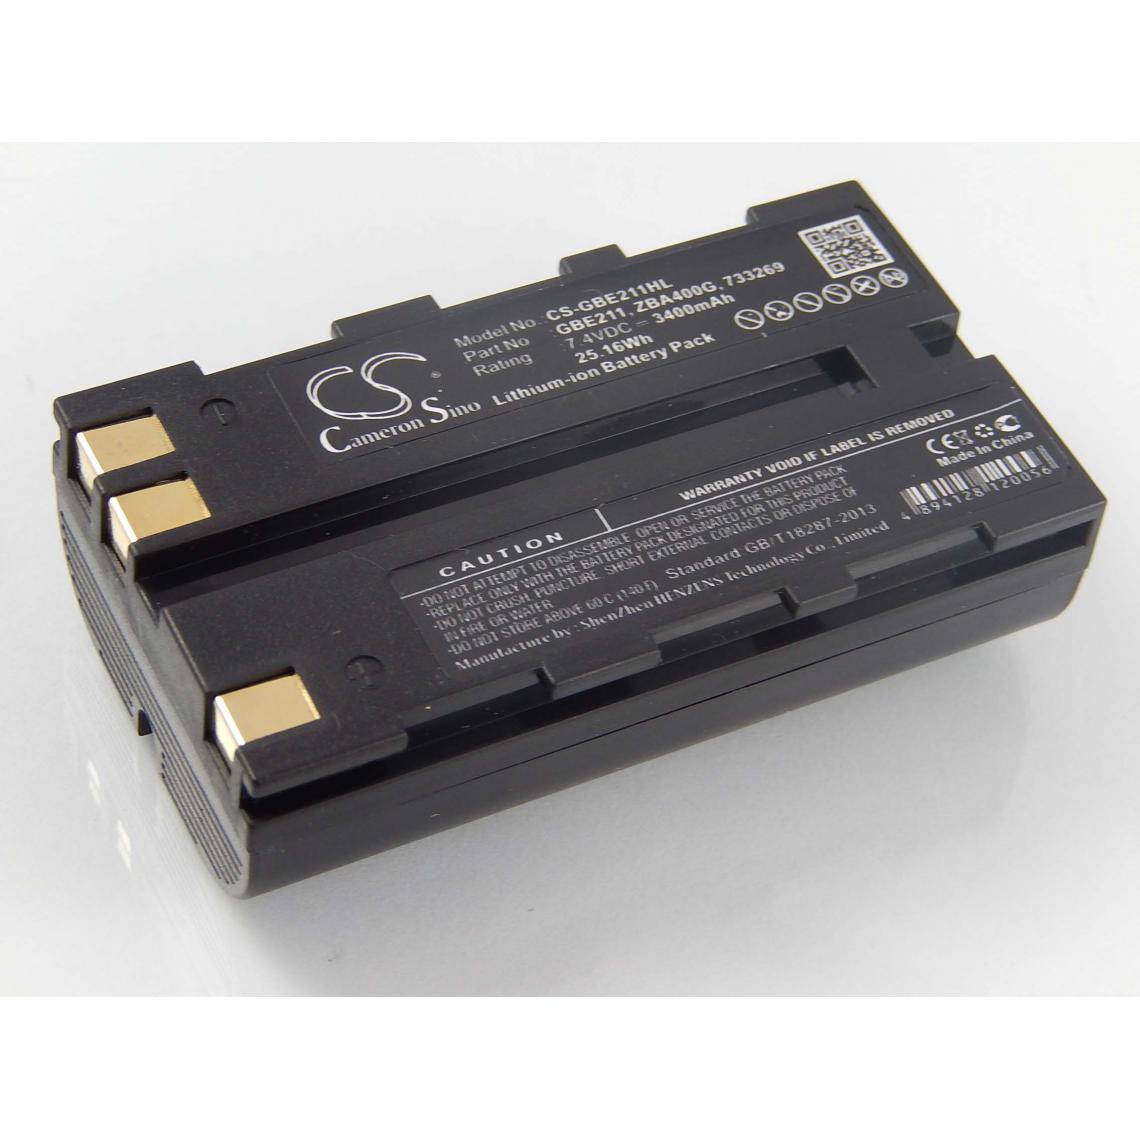 Vhbw - vhbw Batterie compatible avec Leica TC407, TC802, TC803, TC805 dispositif de mesure laser, outil de mesure (3400mAh, 7,4V, Li-ion) - Piles rechargeables